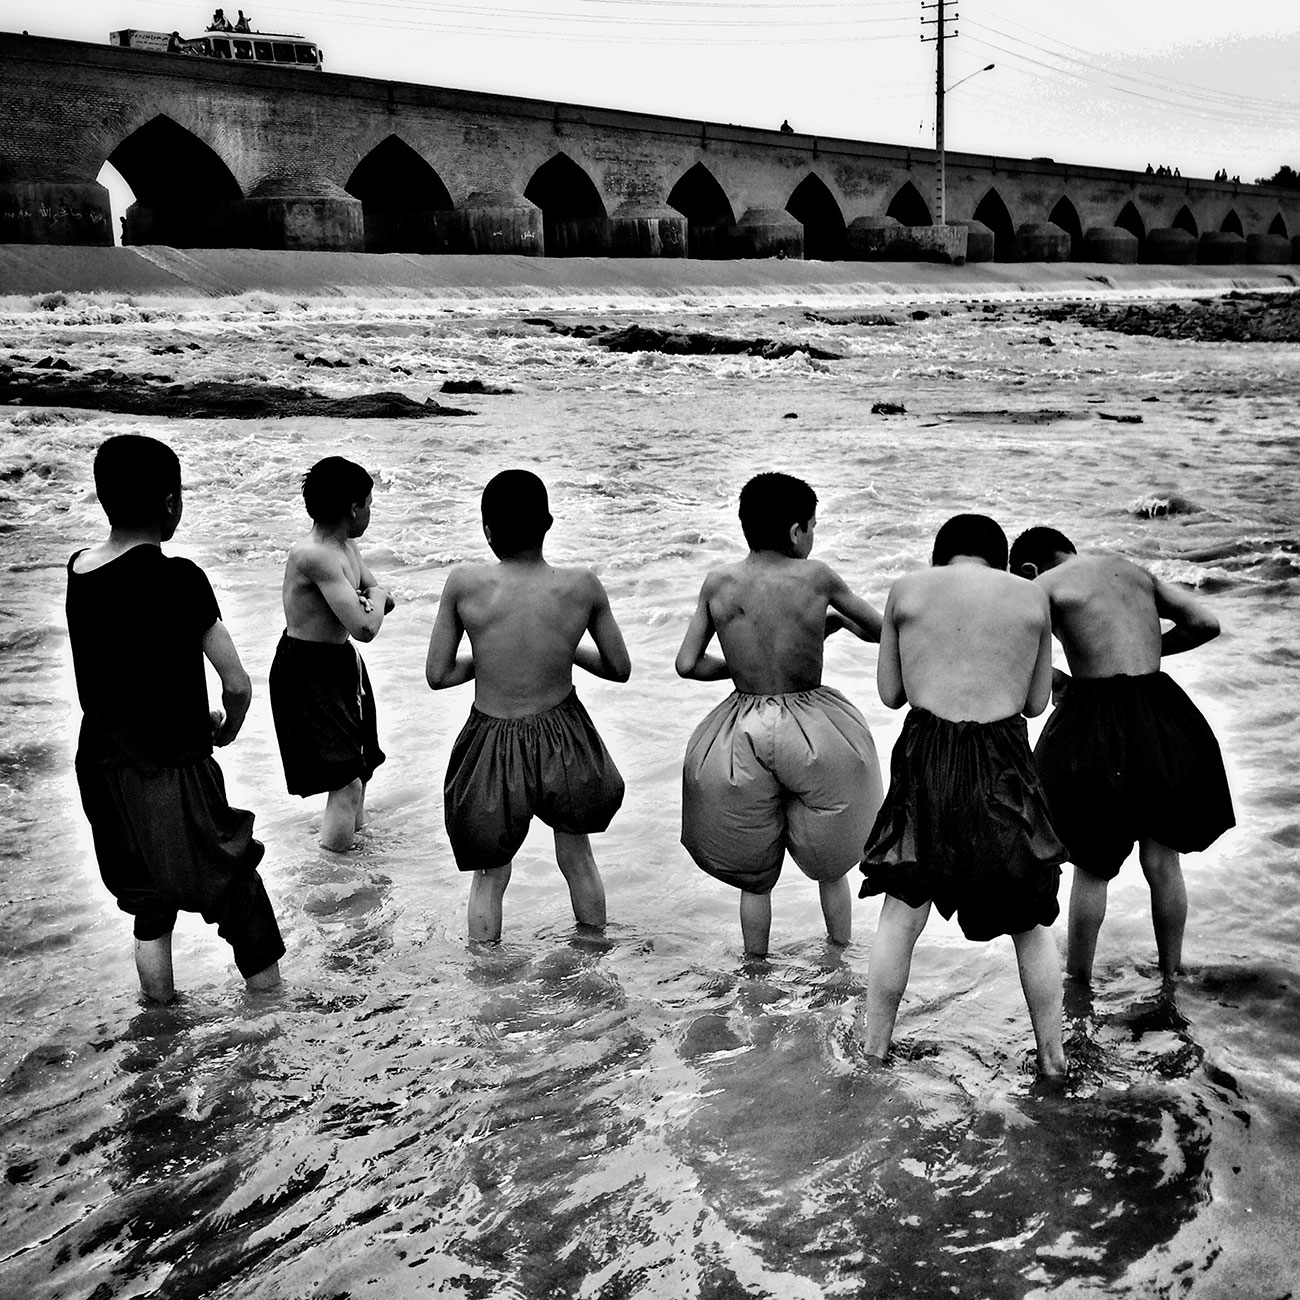 Morteza Herati, “Batchah ha-ye rudkhanah” series [The boys of the river, series I], 2016. Photograph © Morteza Herati